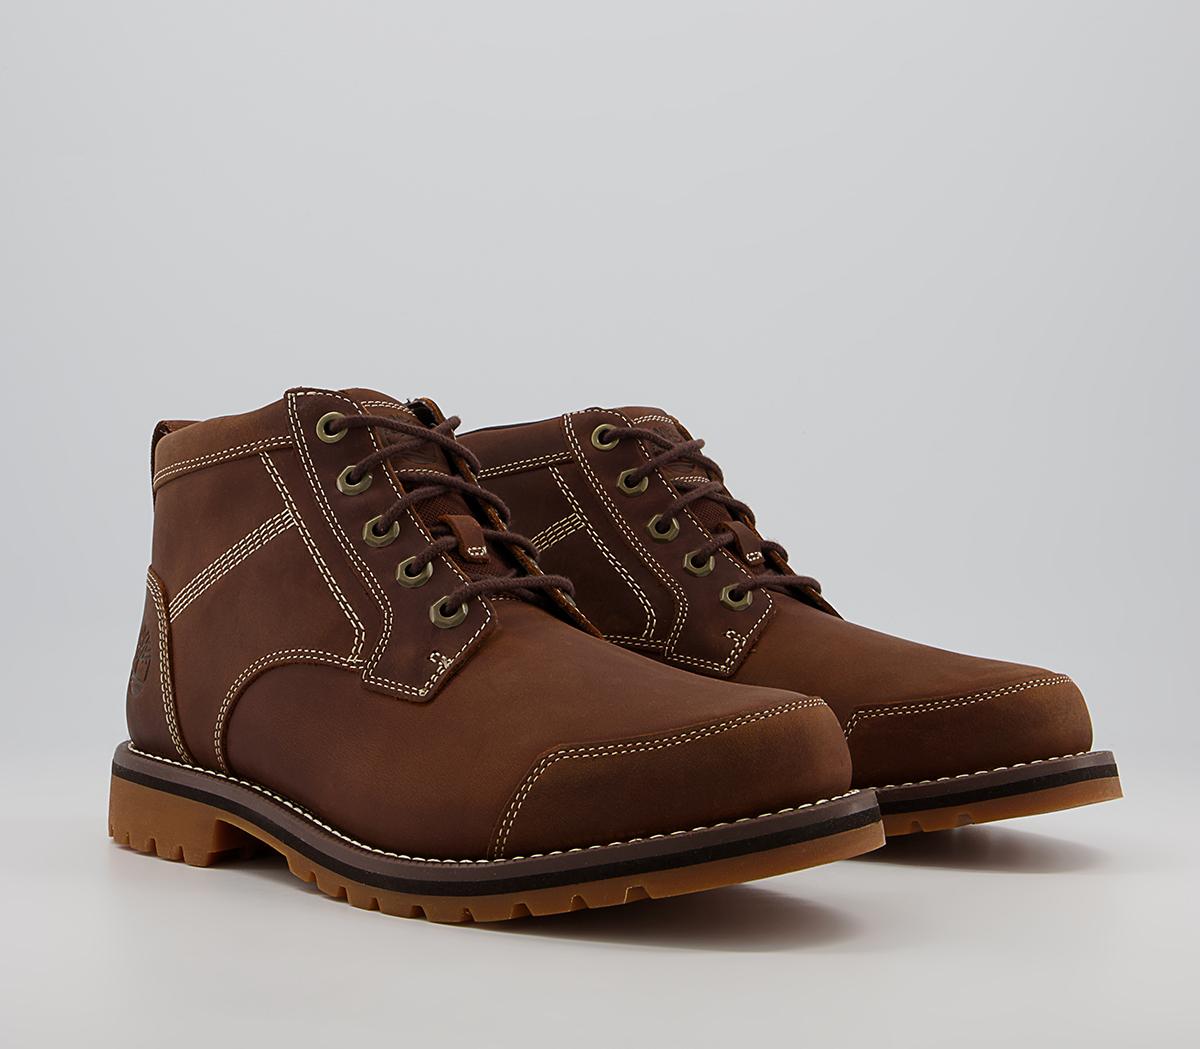 Timberland Larchmont Chukka Boots Rust - Men’s Boots